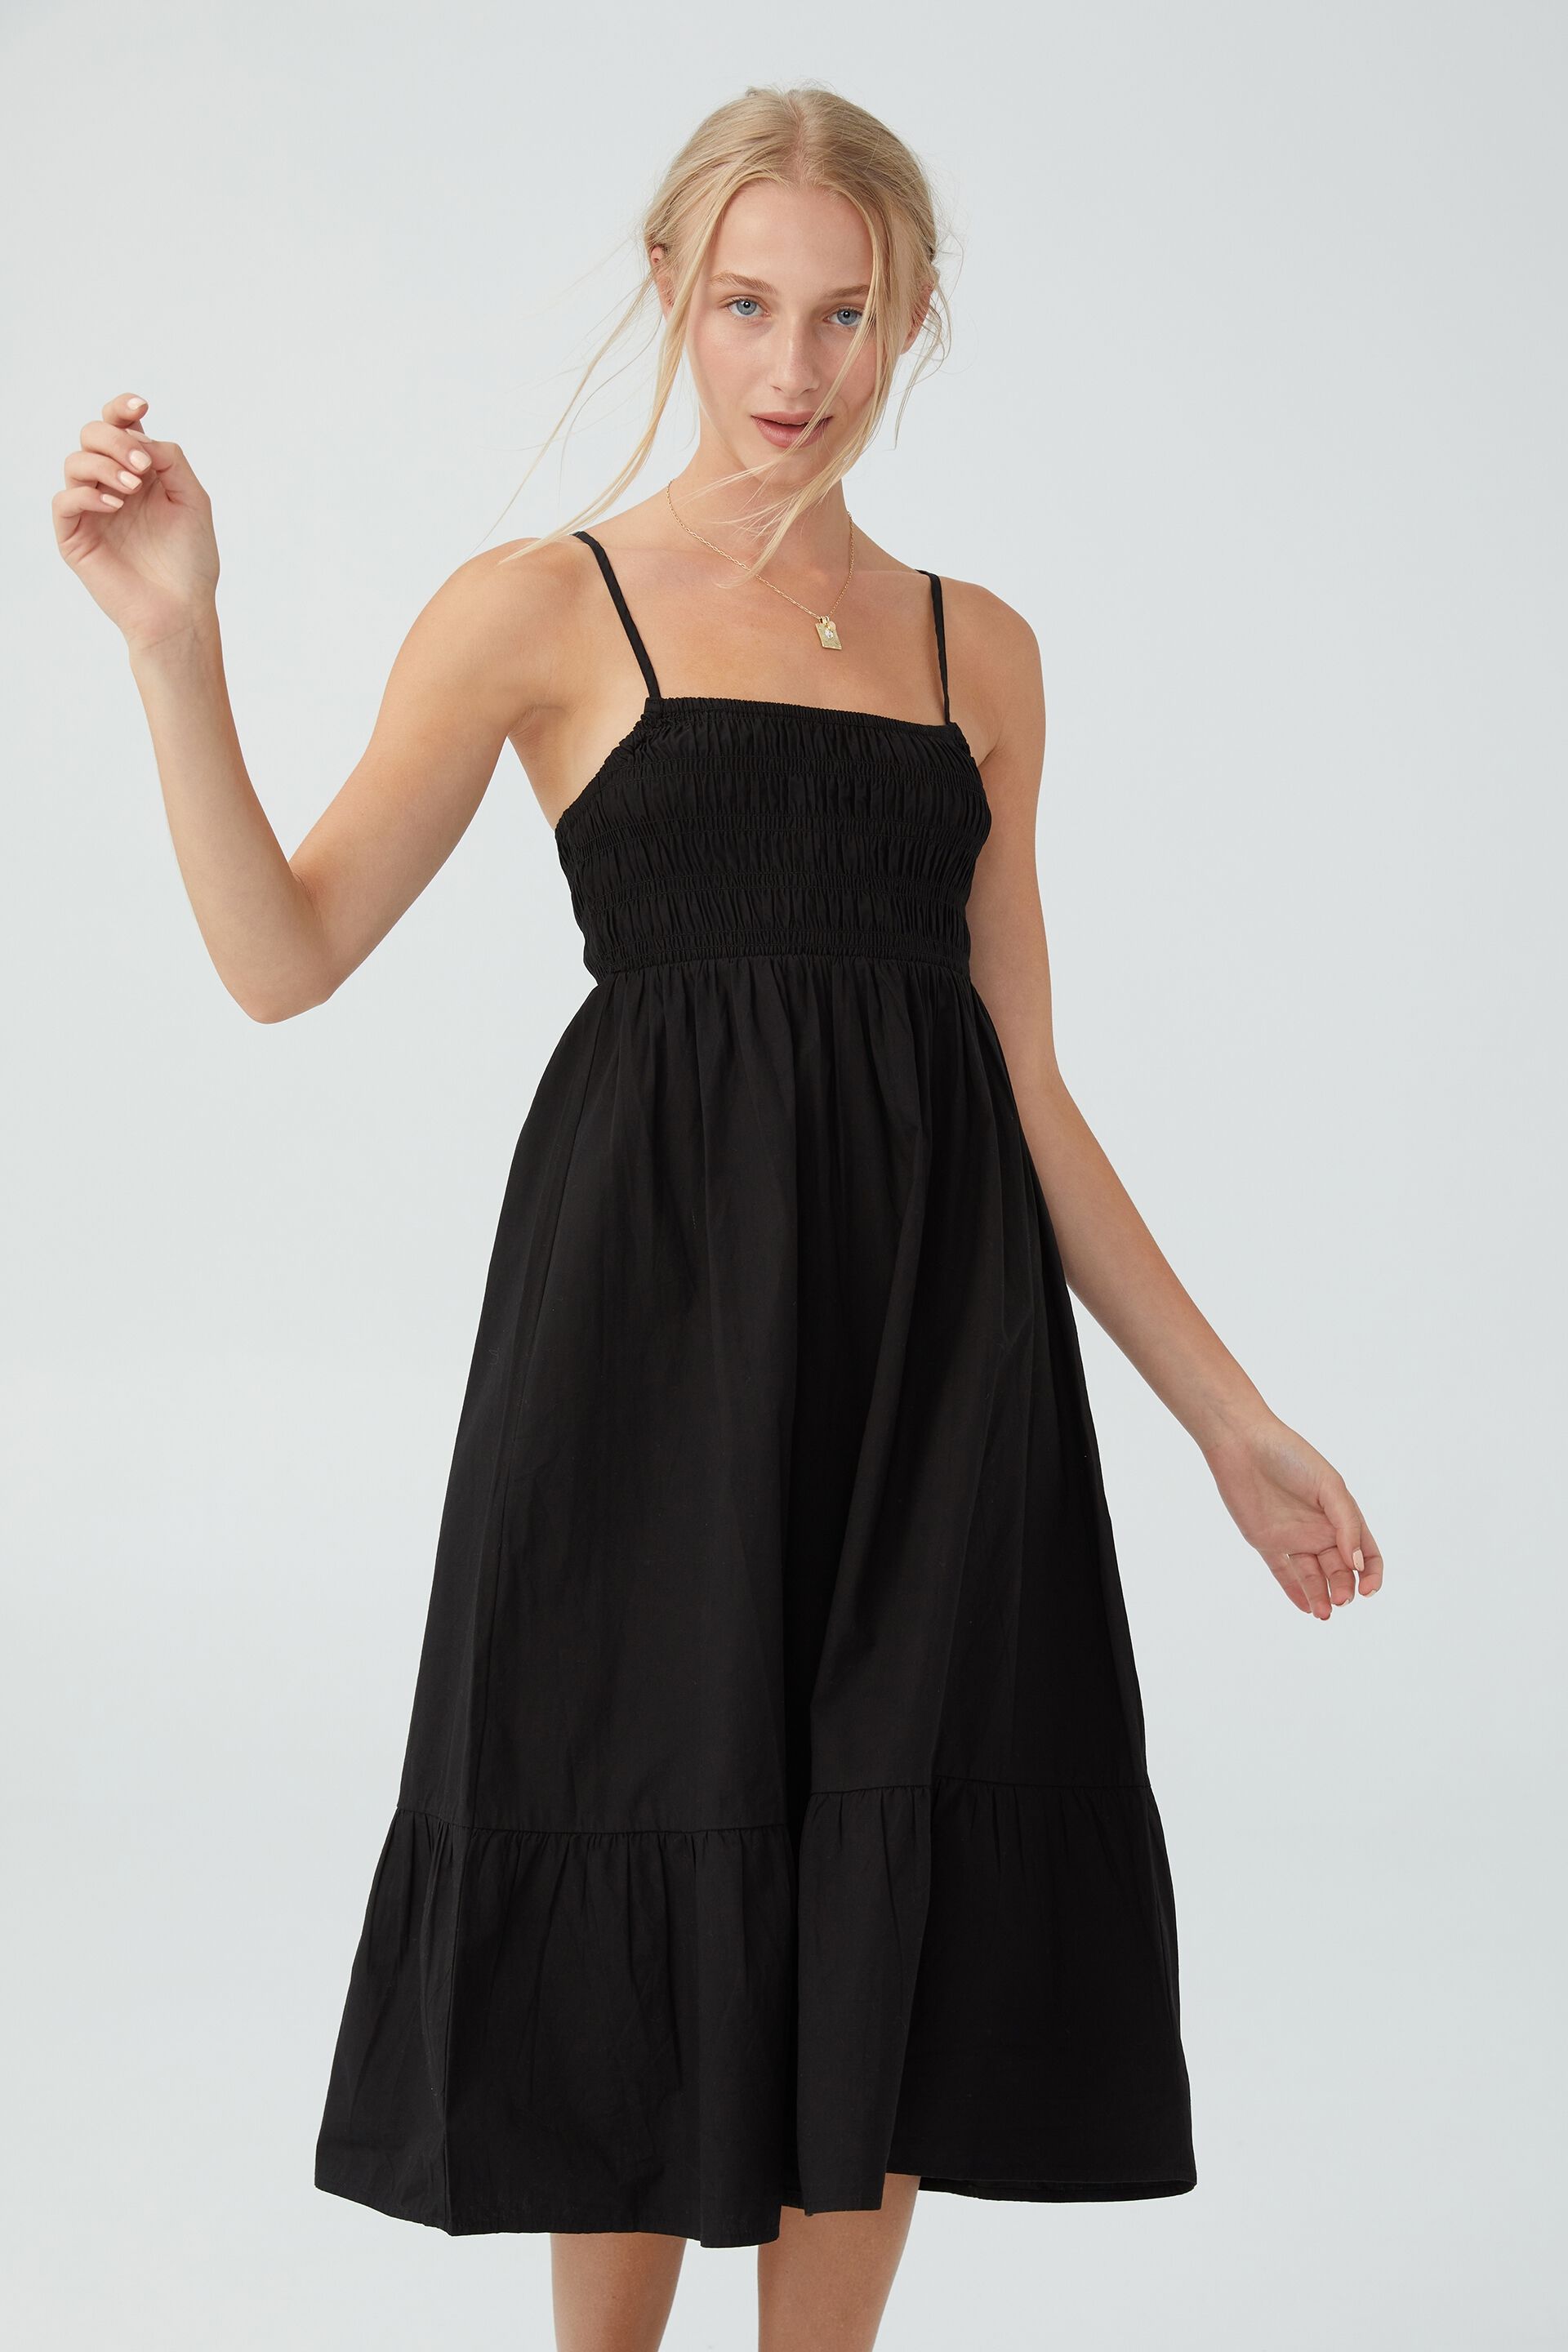 Women's Dresses - Maxi Dresses \u0026 More | Cotton On